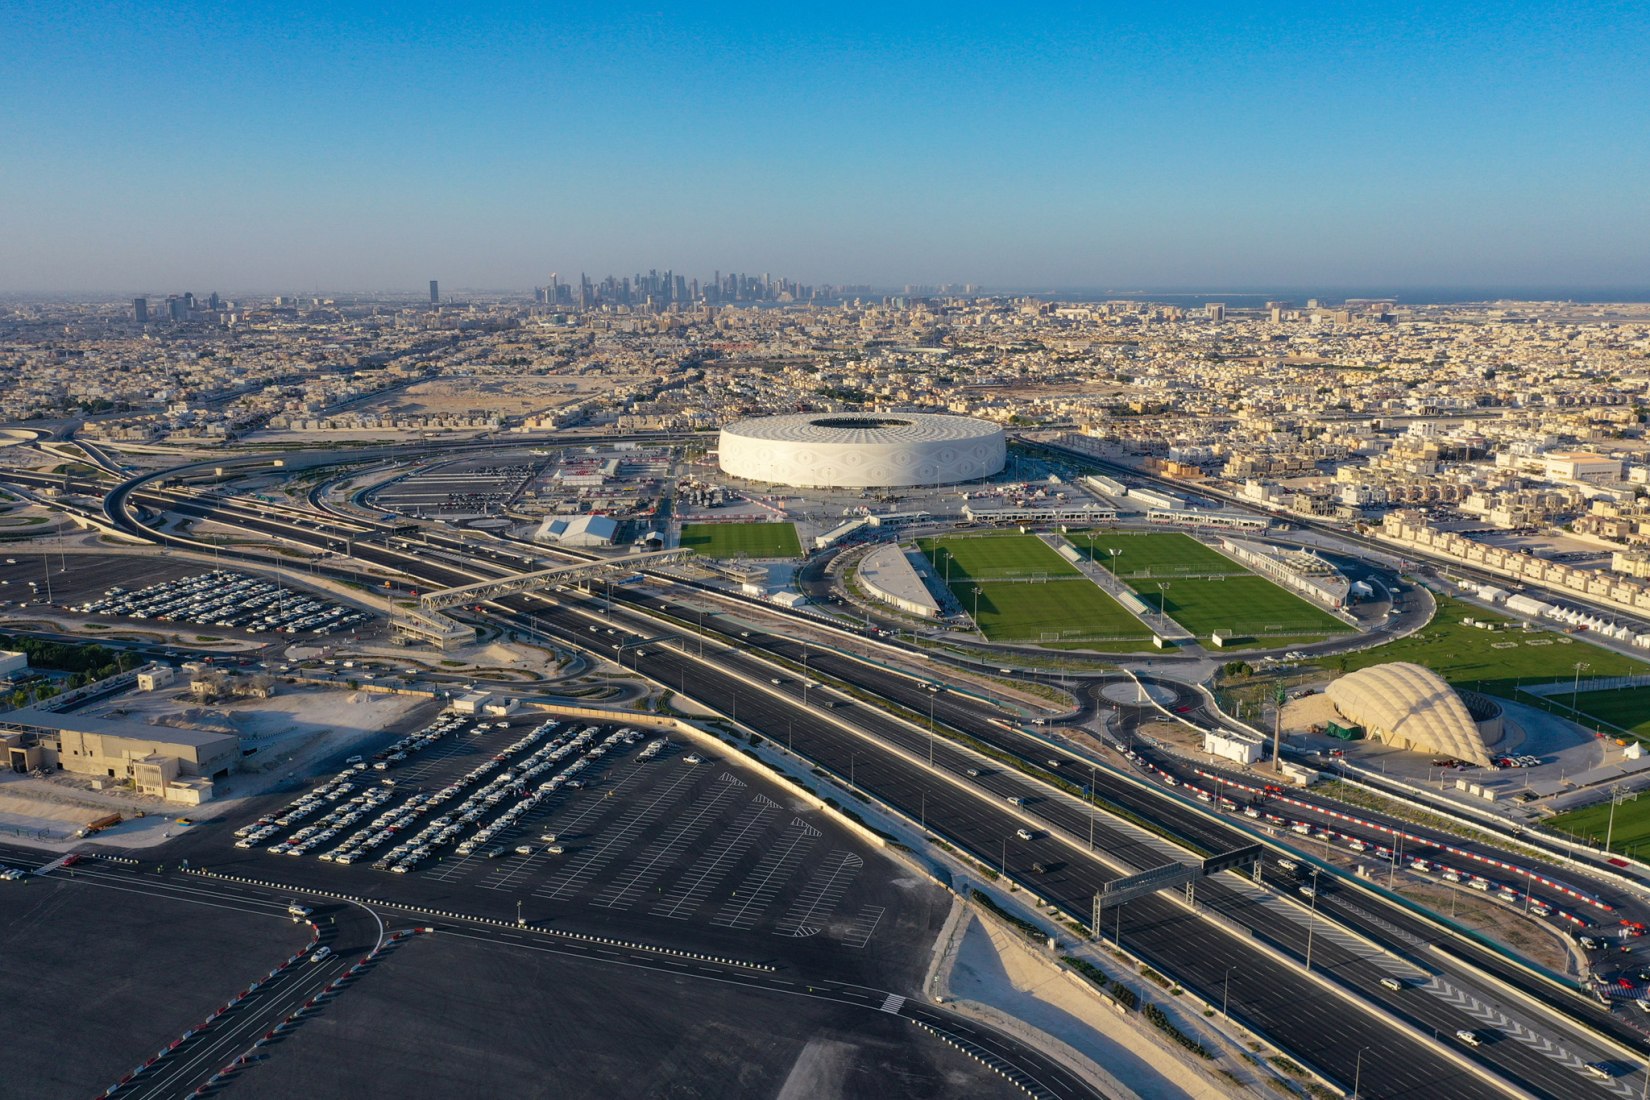 Doha, Qatar. 03rd Dec, 2022. Vista do Estádio Internacional